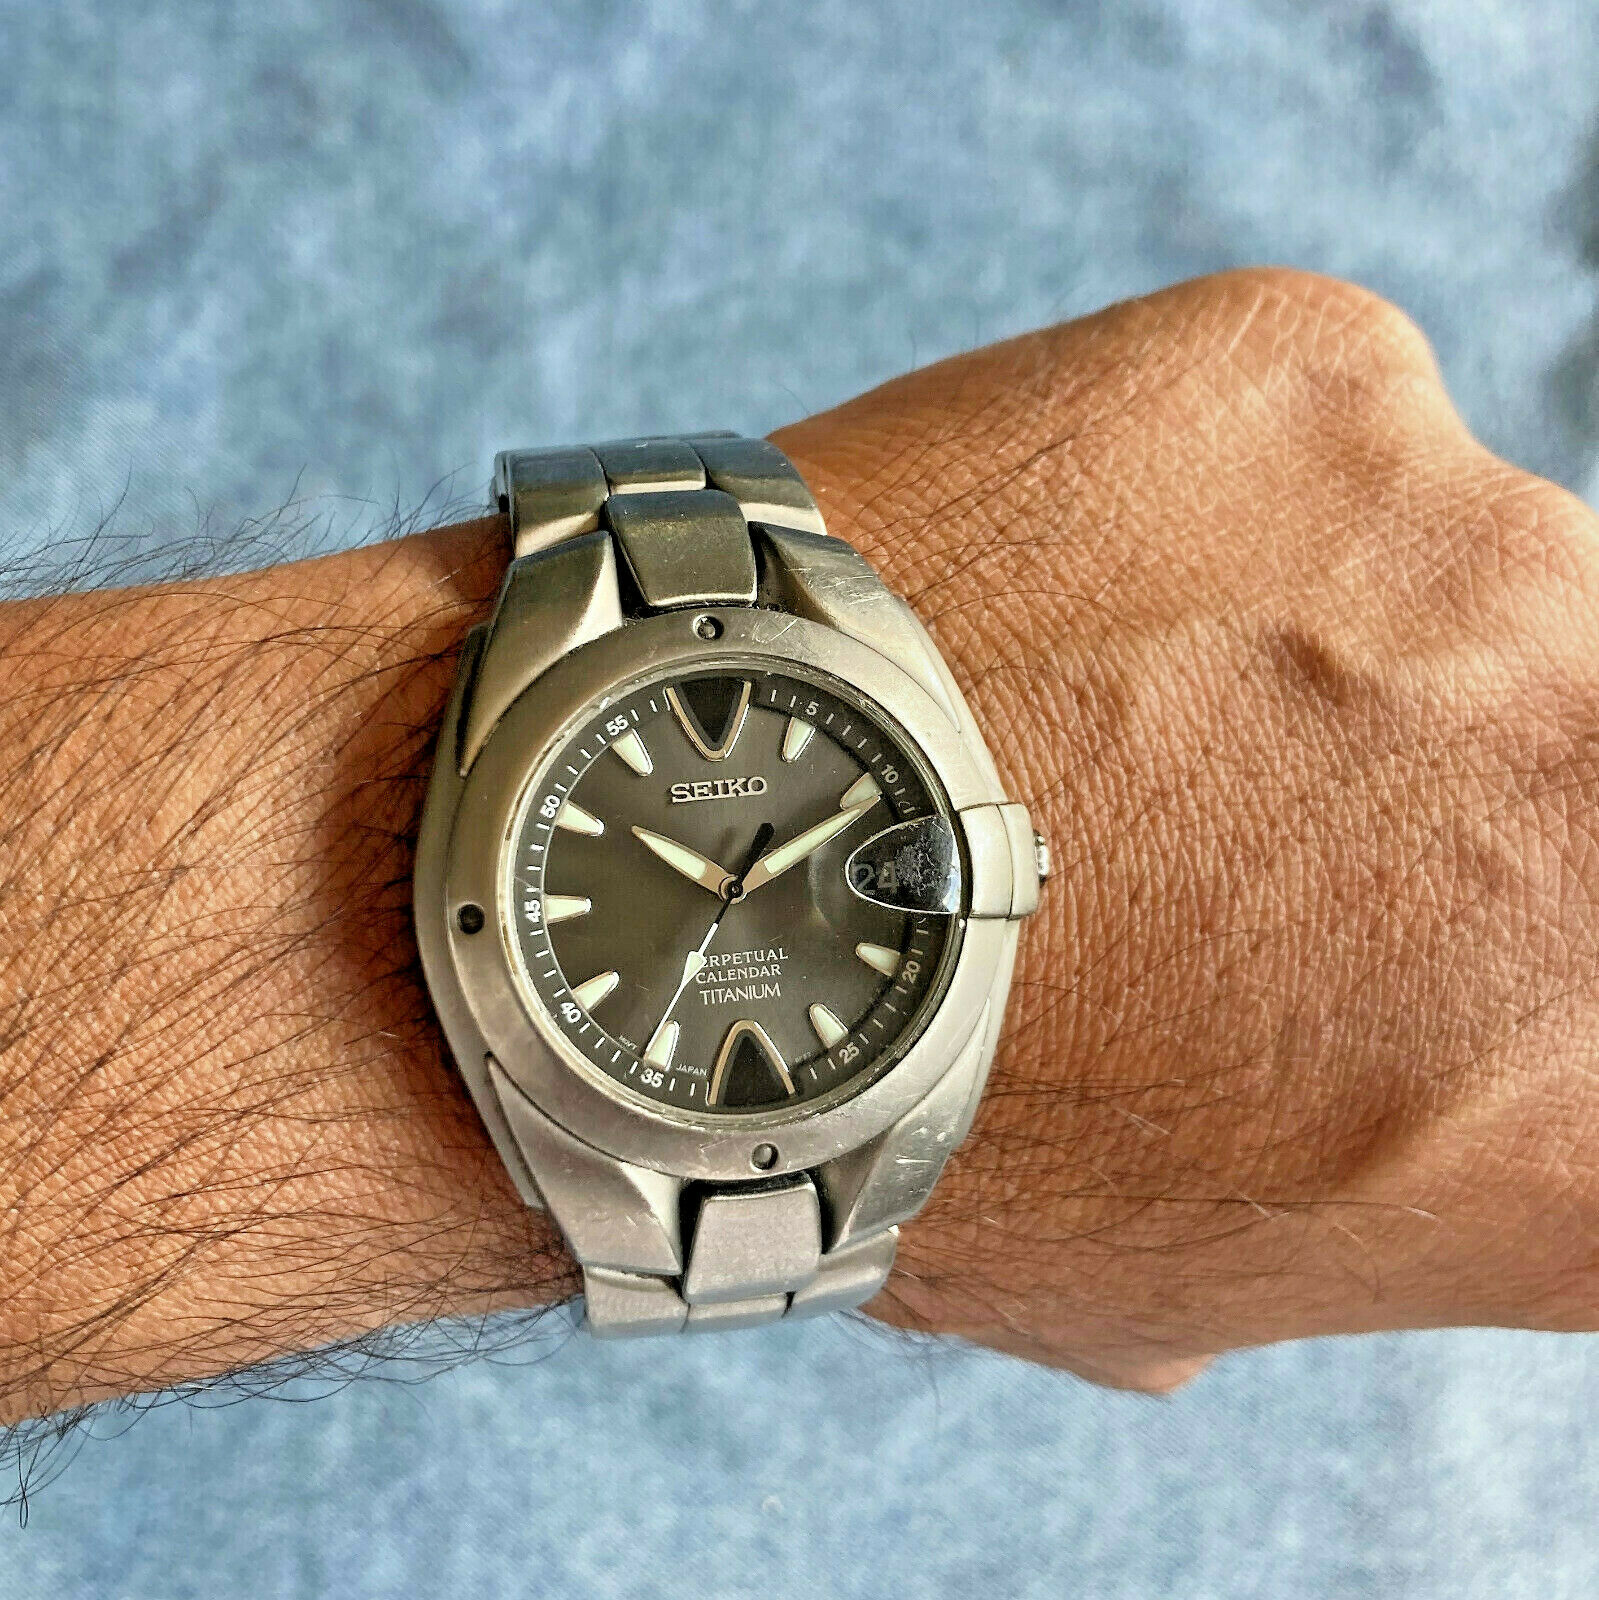 Rare Seiko SBQK001 8F32-0049 Perpetual Calendar Titanium Wristwatch, New  Battery | WatchCharts